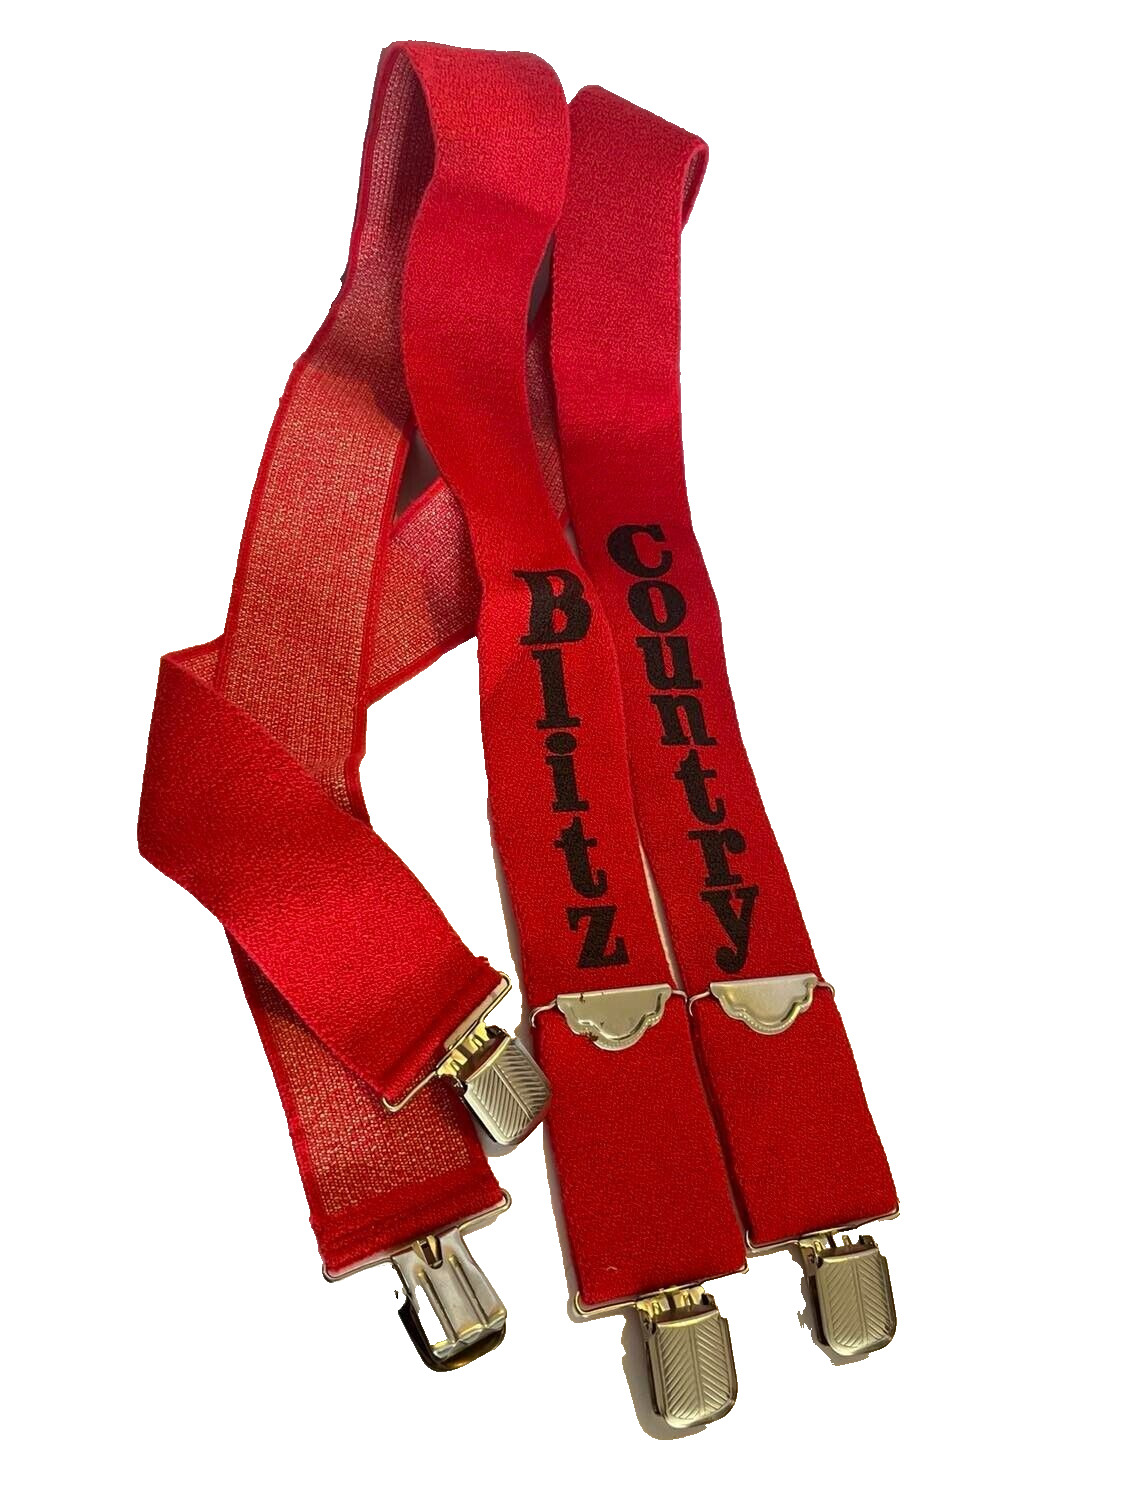 Vintage Blitz Weinhart Beer Suspenders - 1970's - Blitz Country - Red & Black